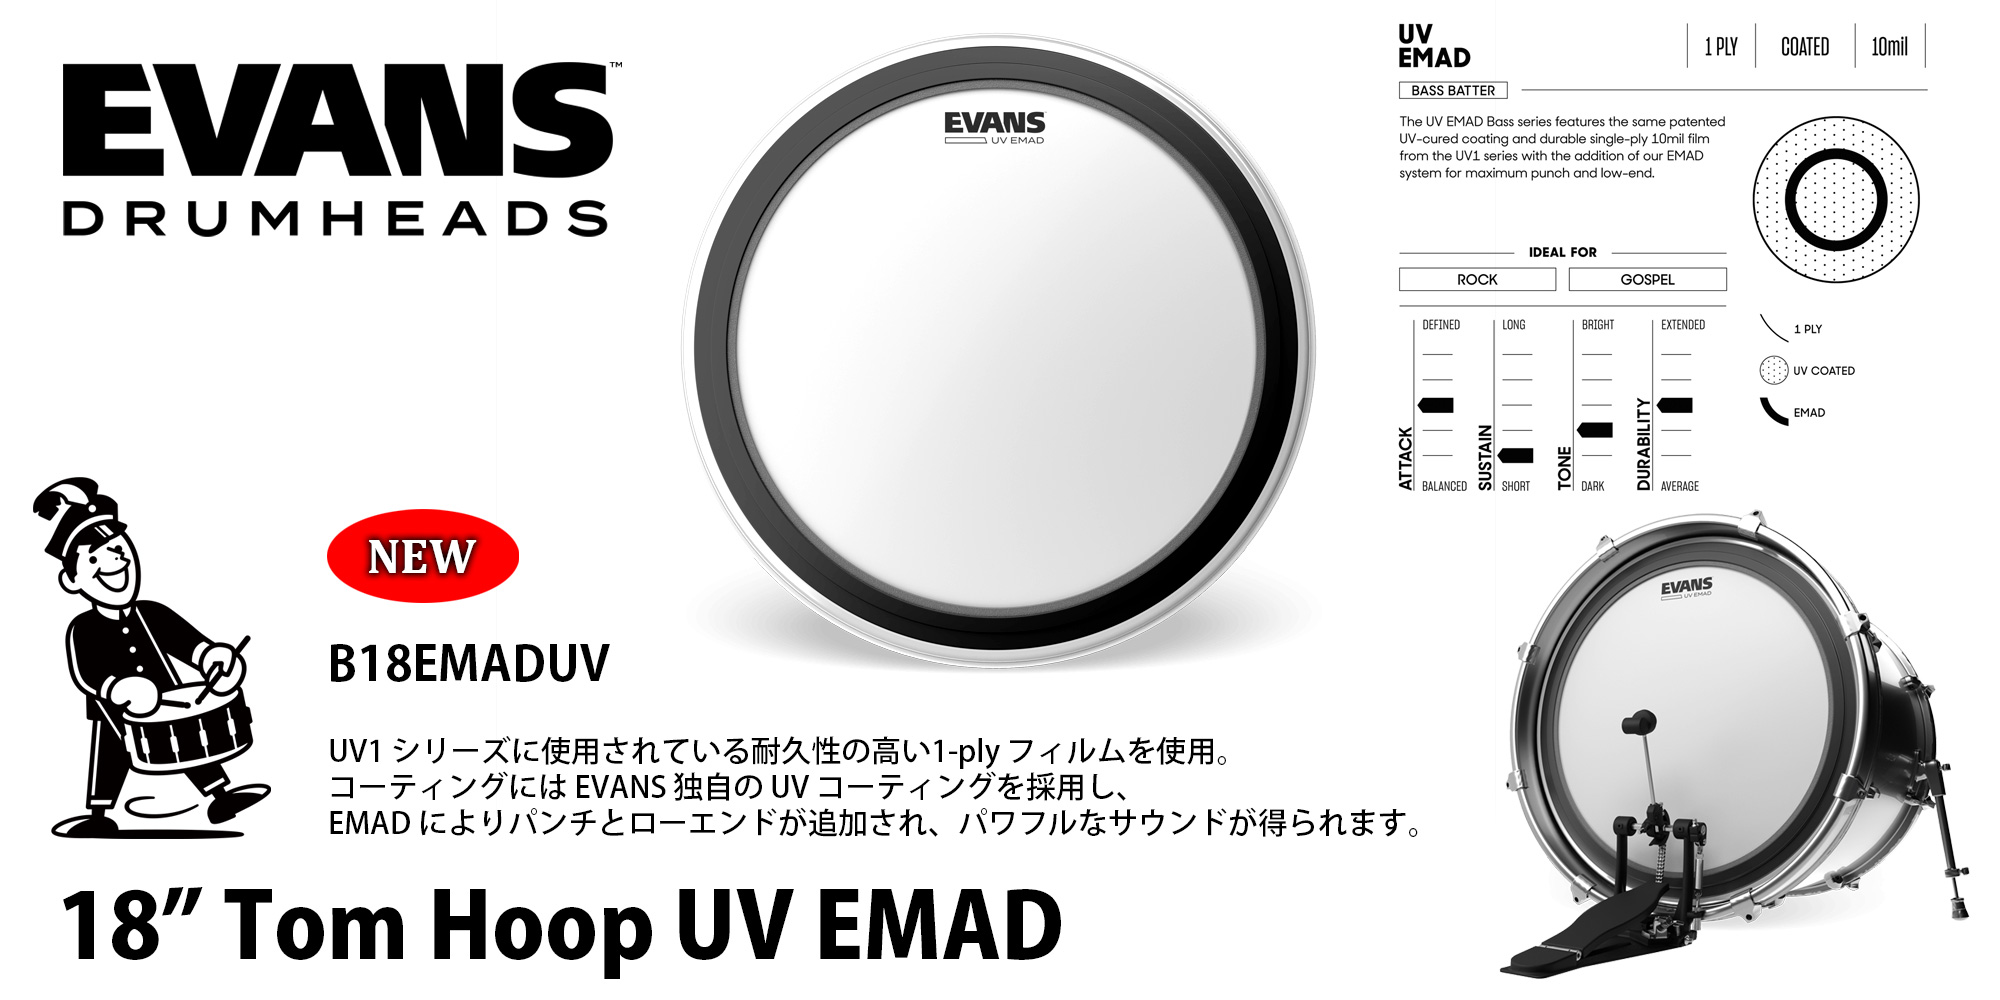 【 Evans 新製品 】18” Tom Hoop UV EMAD 販売開始